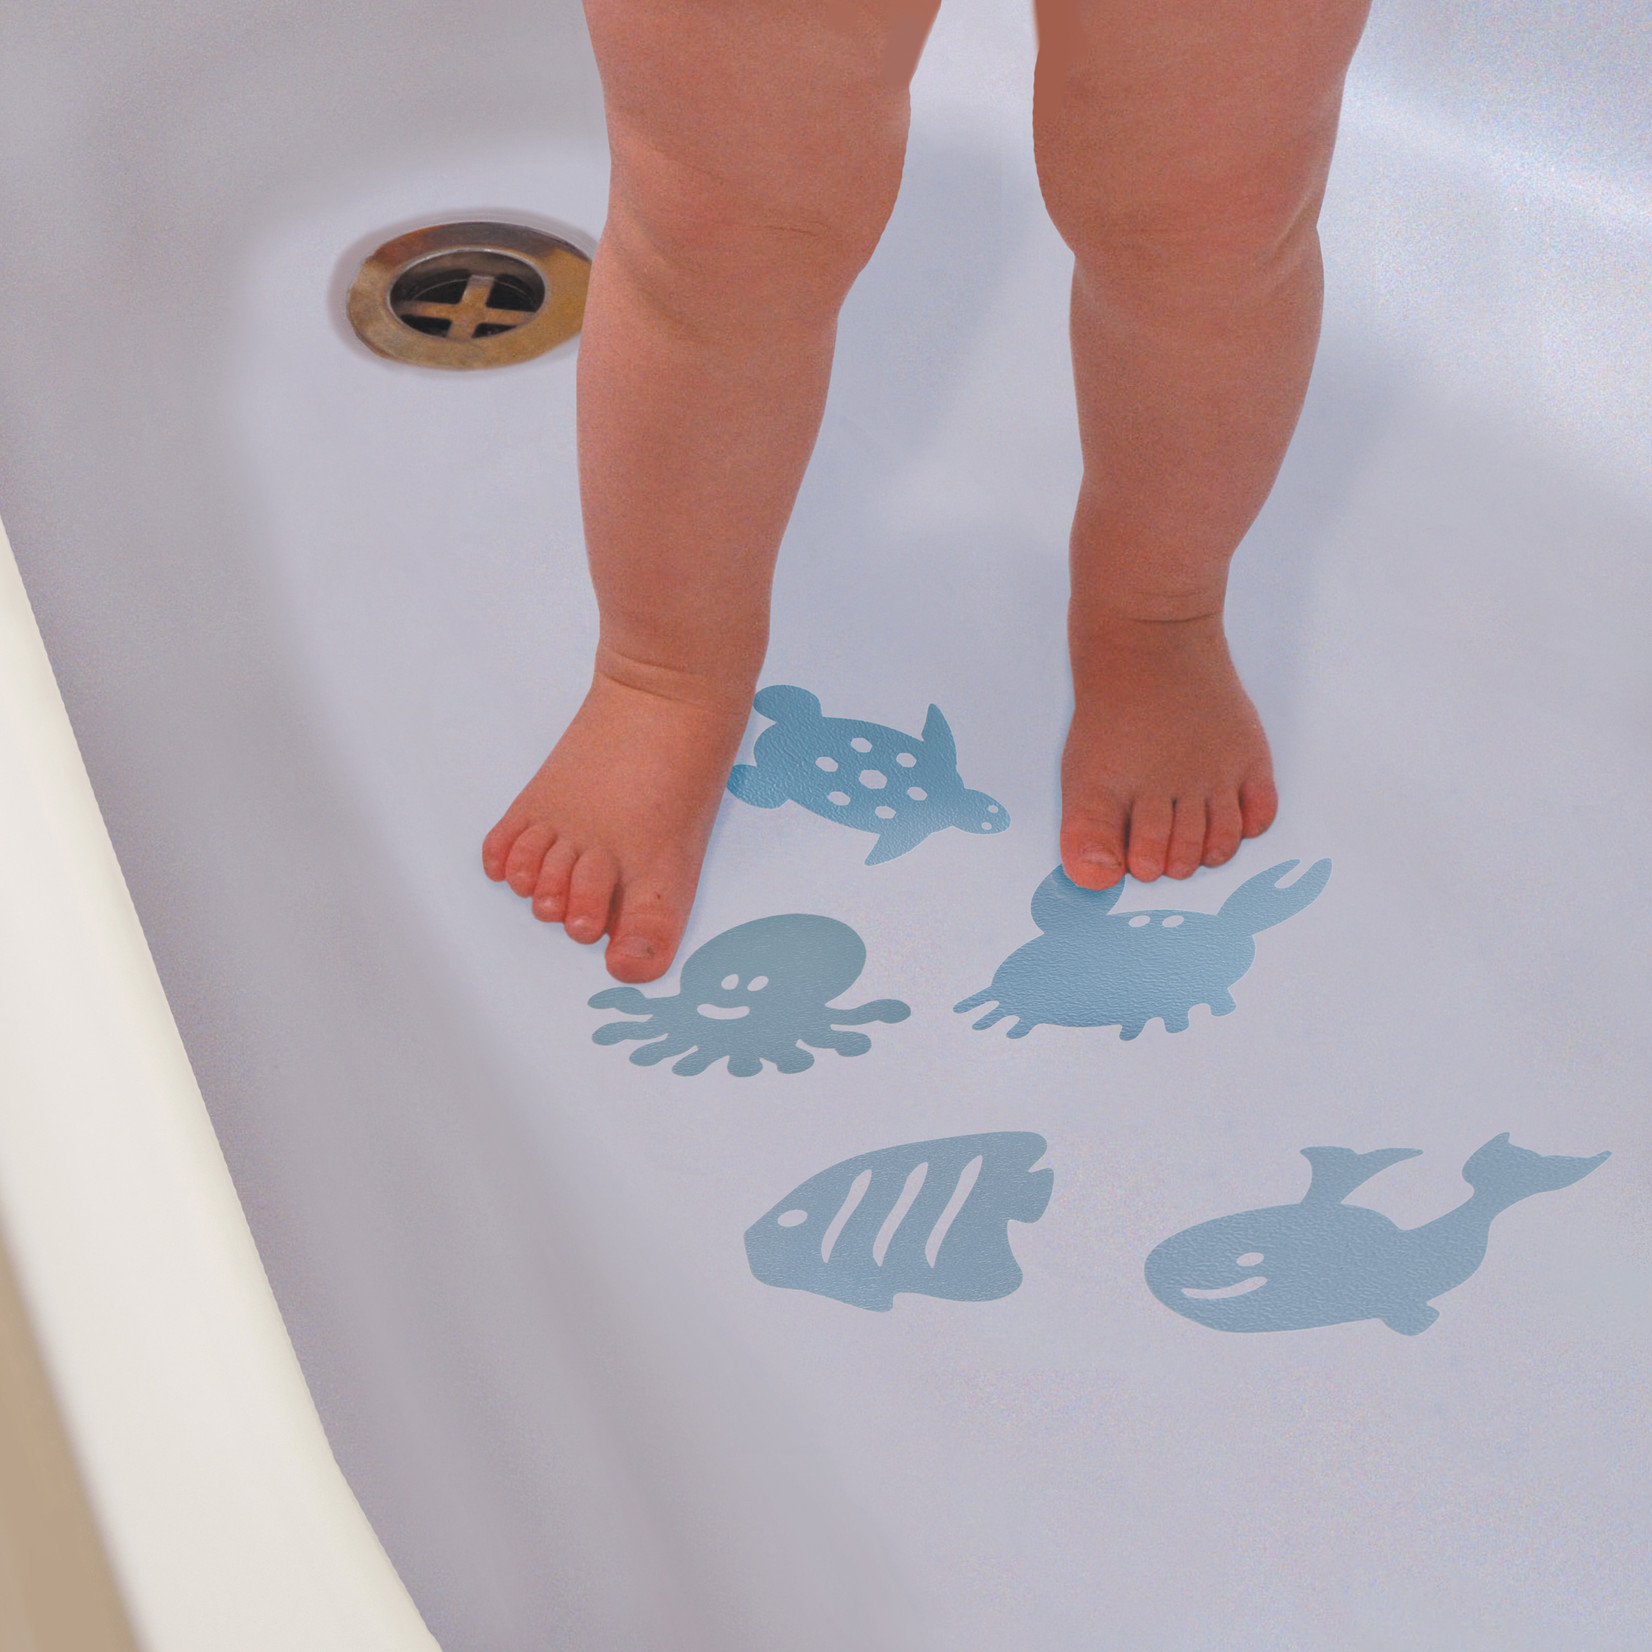 Dreambaby Anti-Slip Bath Mat with Too Hot Indicator